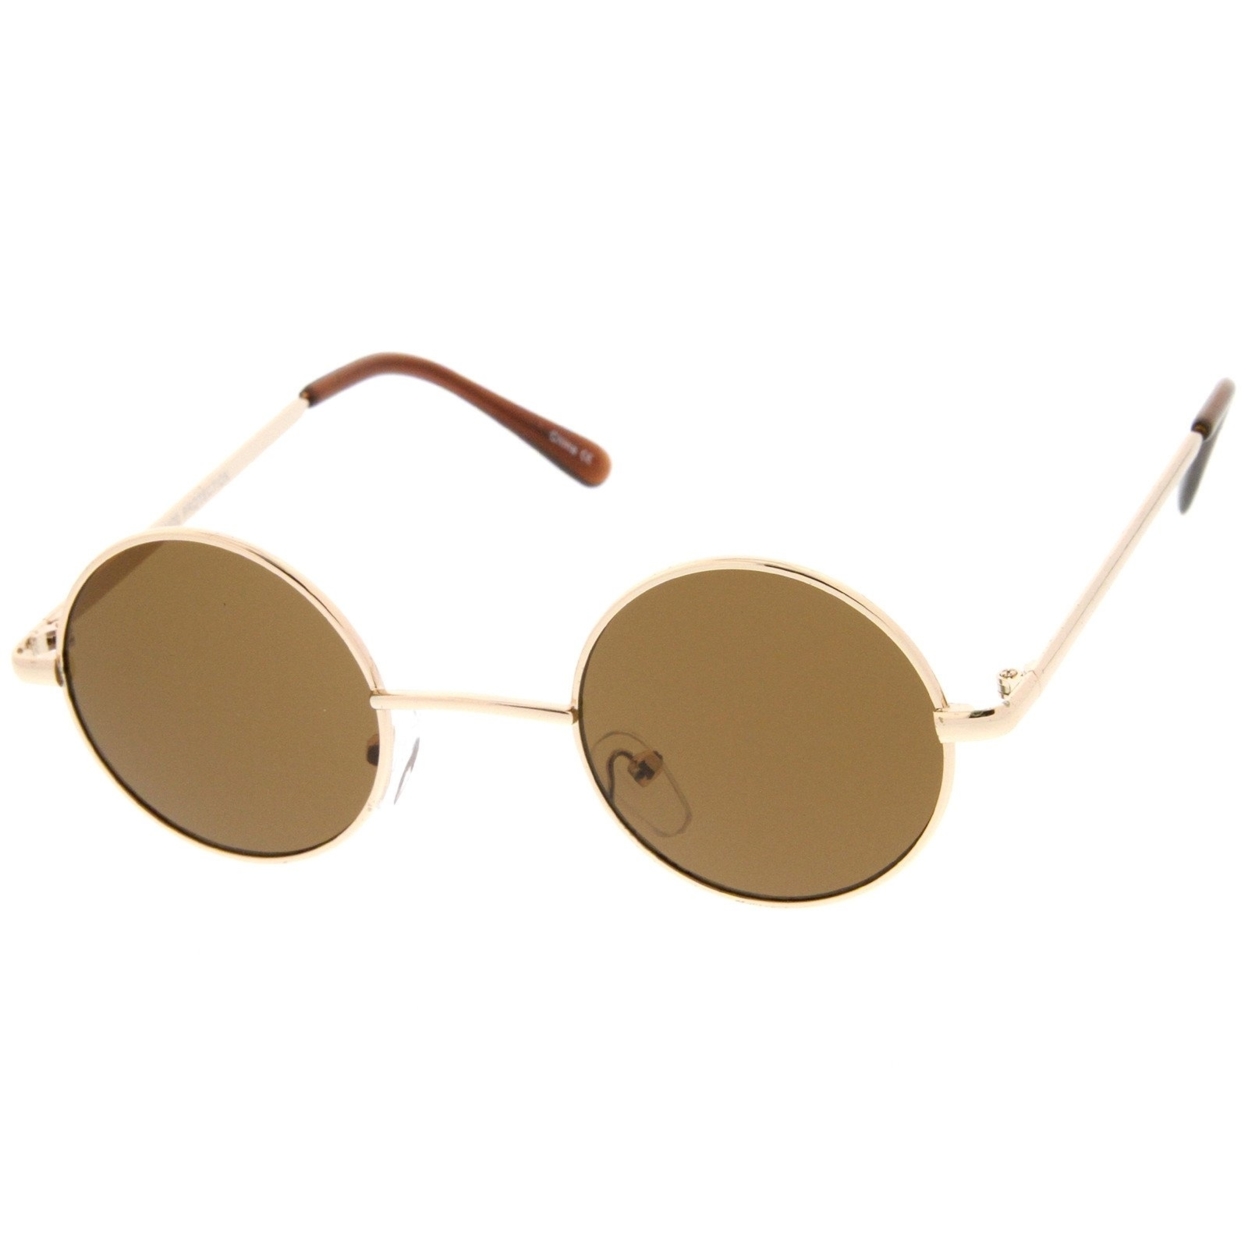 Small Retro Lennon Inspired Style Neutral-Colored Lens Round Metal Sunglasses 41mm - Gunmetal / Smoke